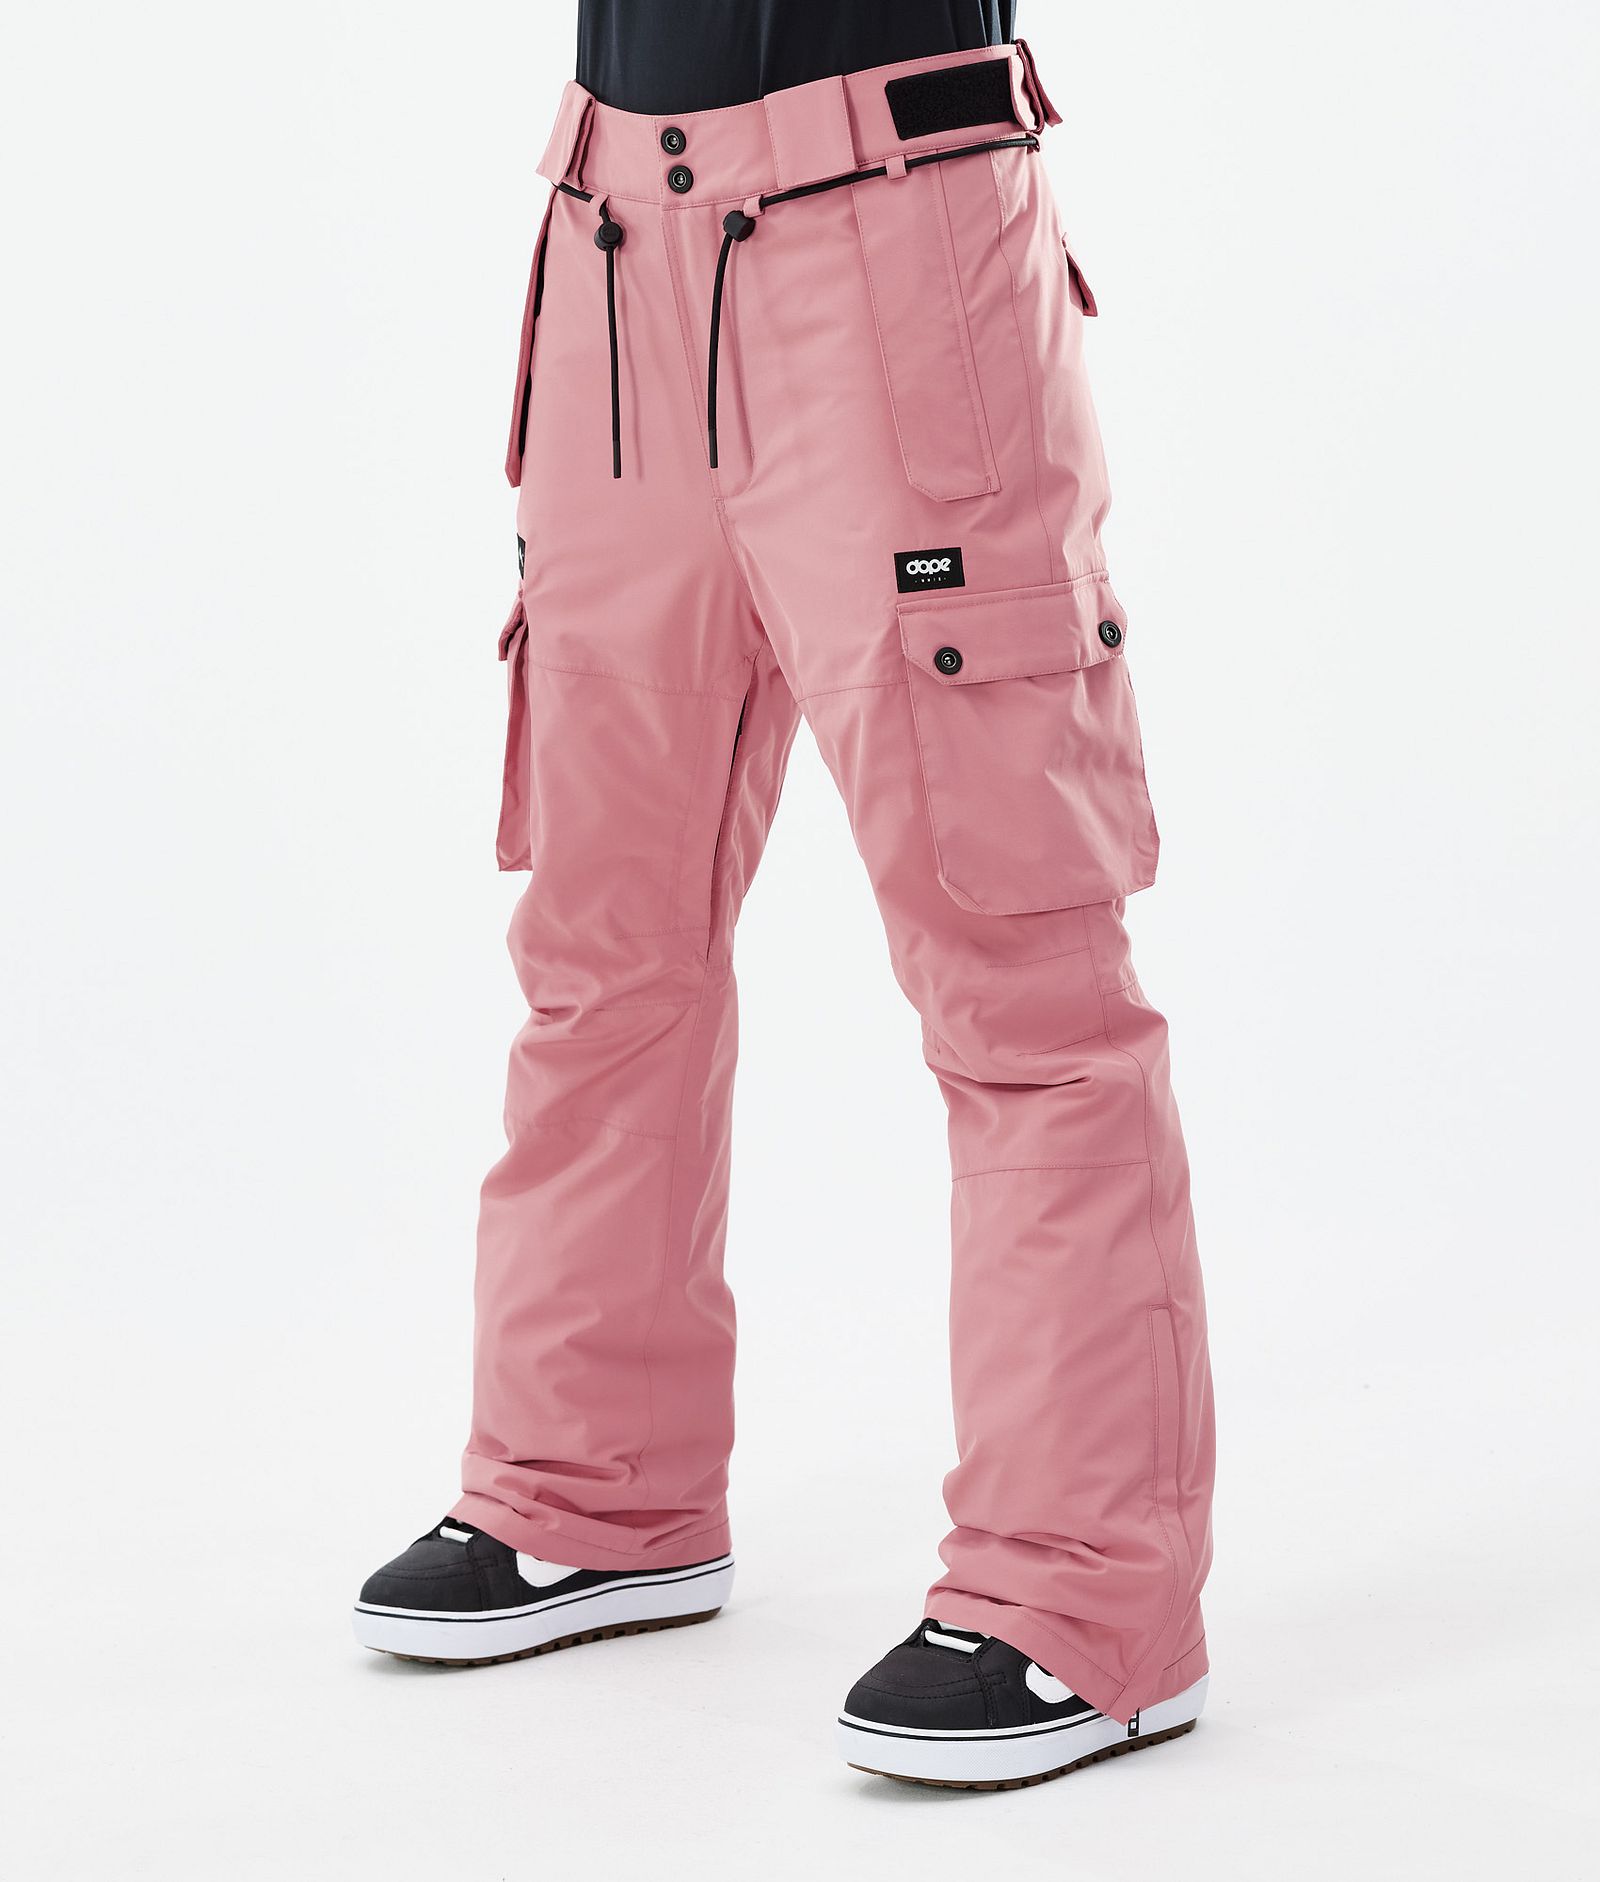 Iconic W Pantalon de Snowboard Femme Pink